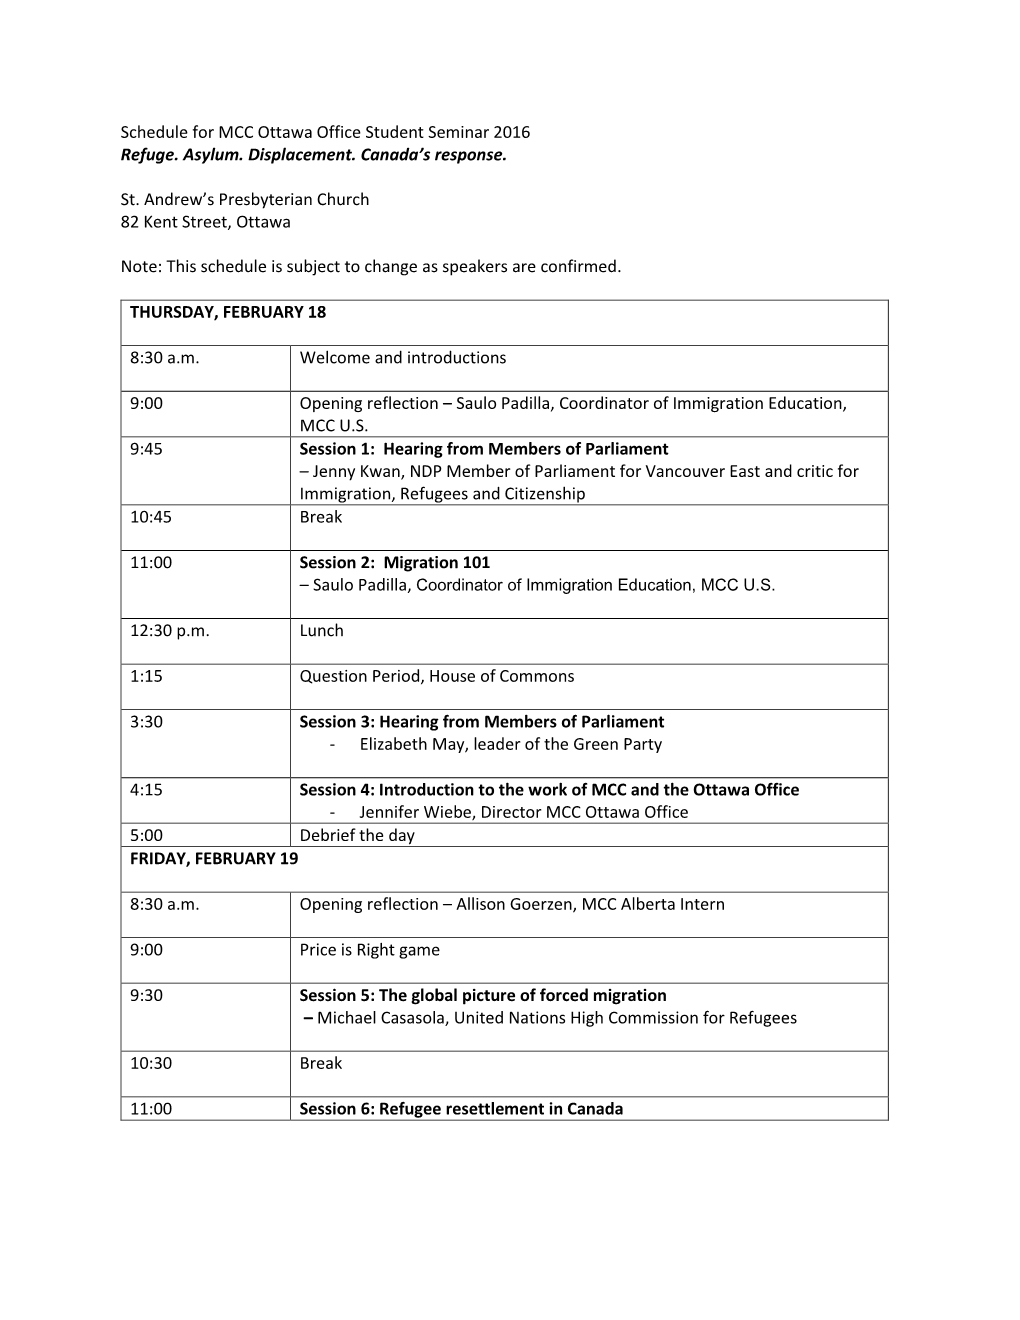 Schedule for MCC Ottawa Office Student Seminar 2016 Refuge